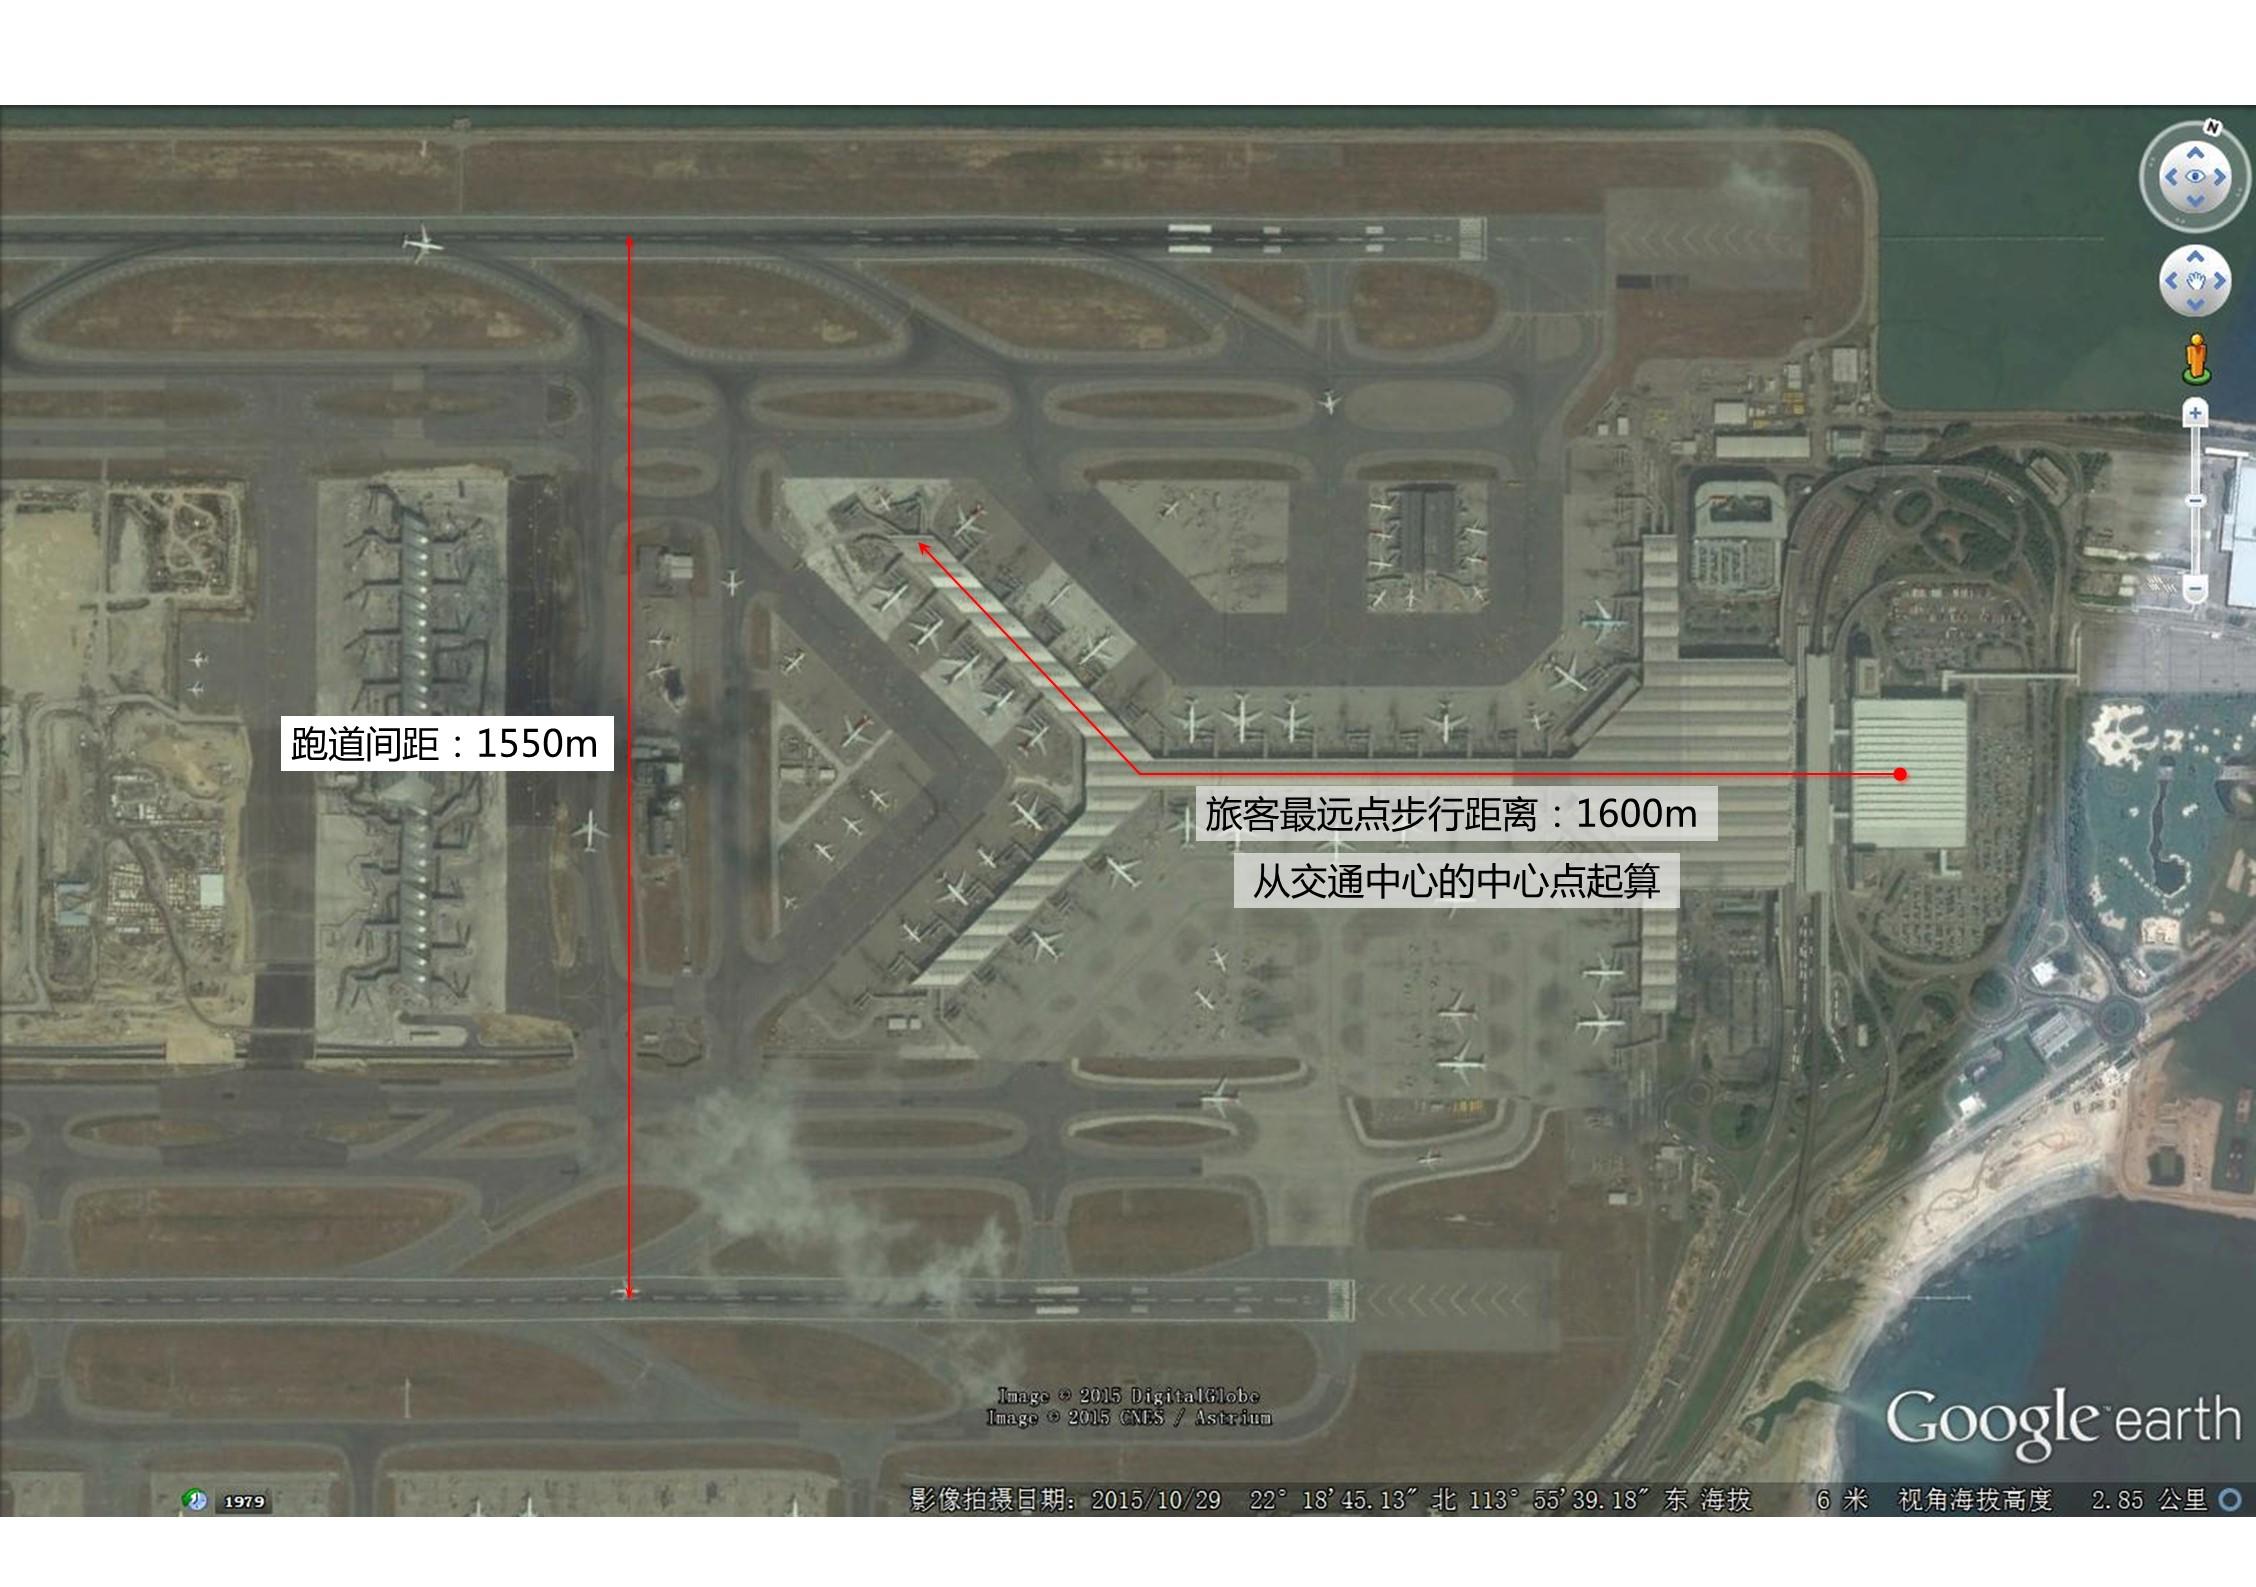 深圳·宝安国际机场---Studio Fuksas-搜建筑网